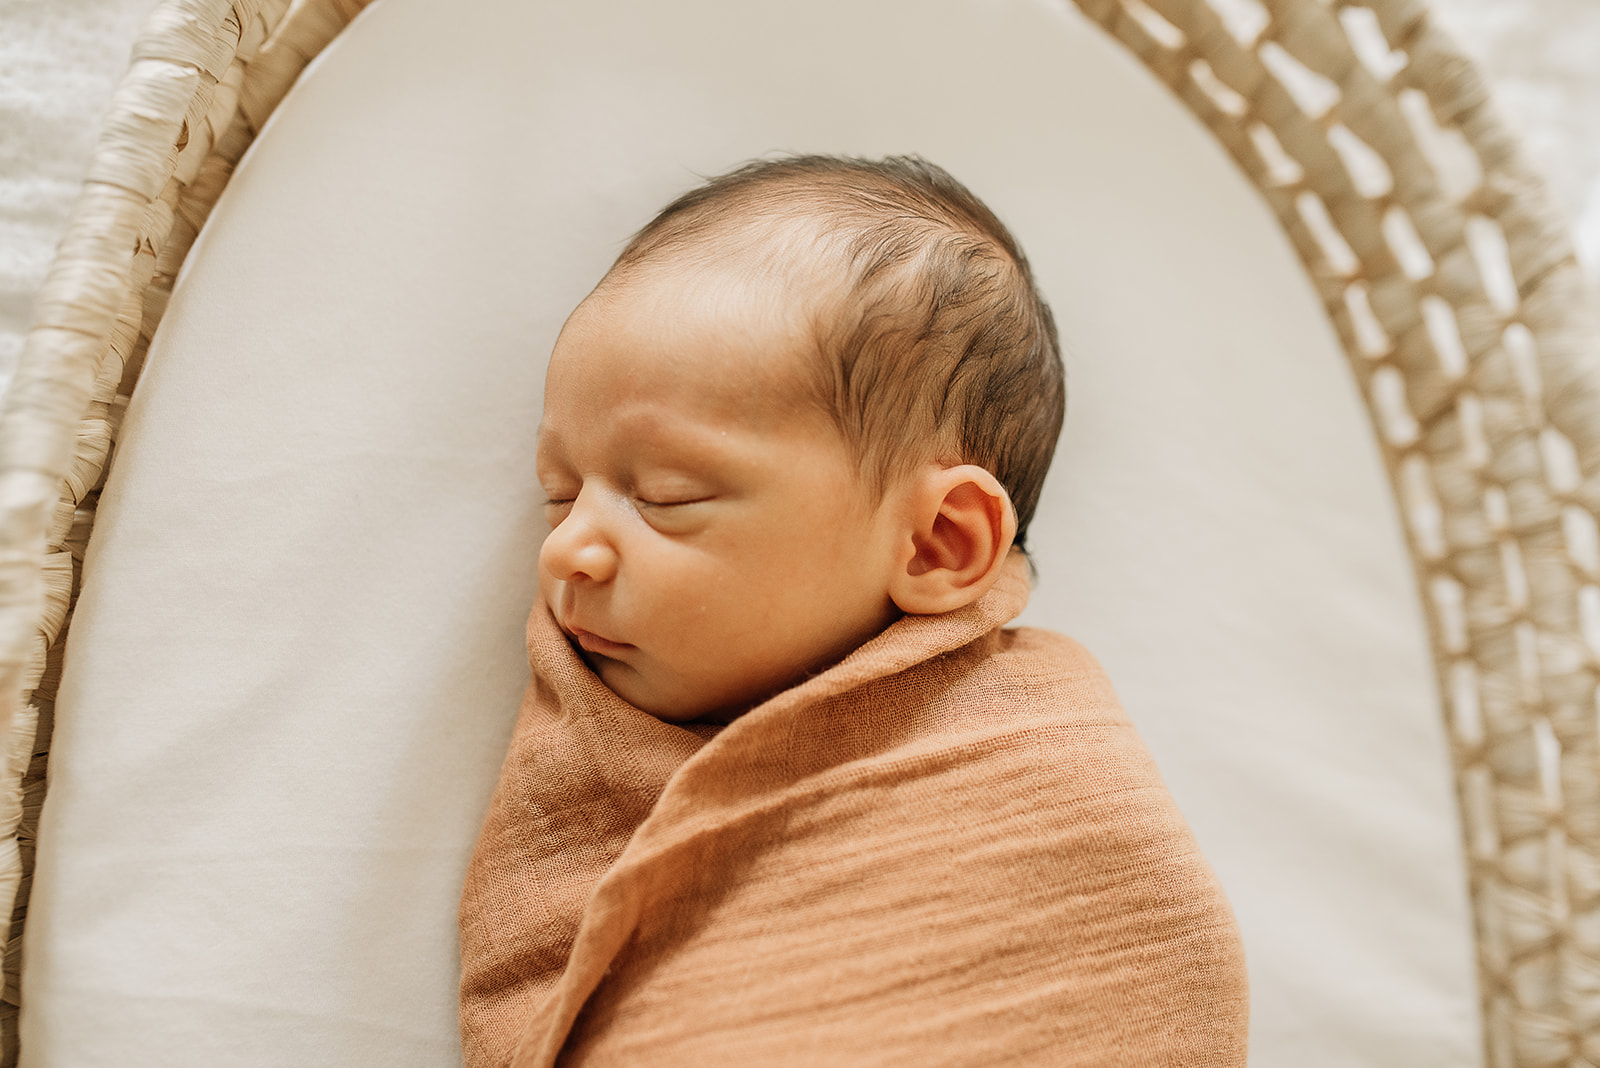 A newborn baby sleeps in a woven basket in an orange swaddle Houston baby shower venues